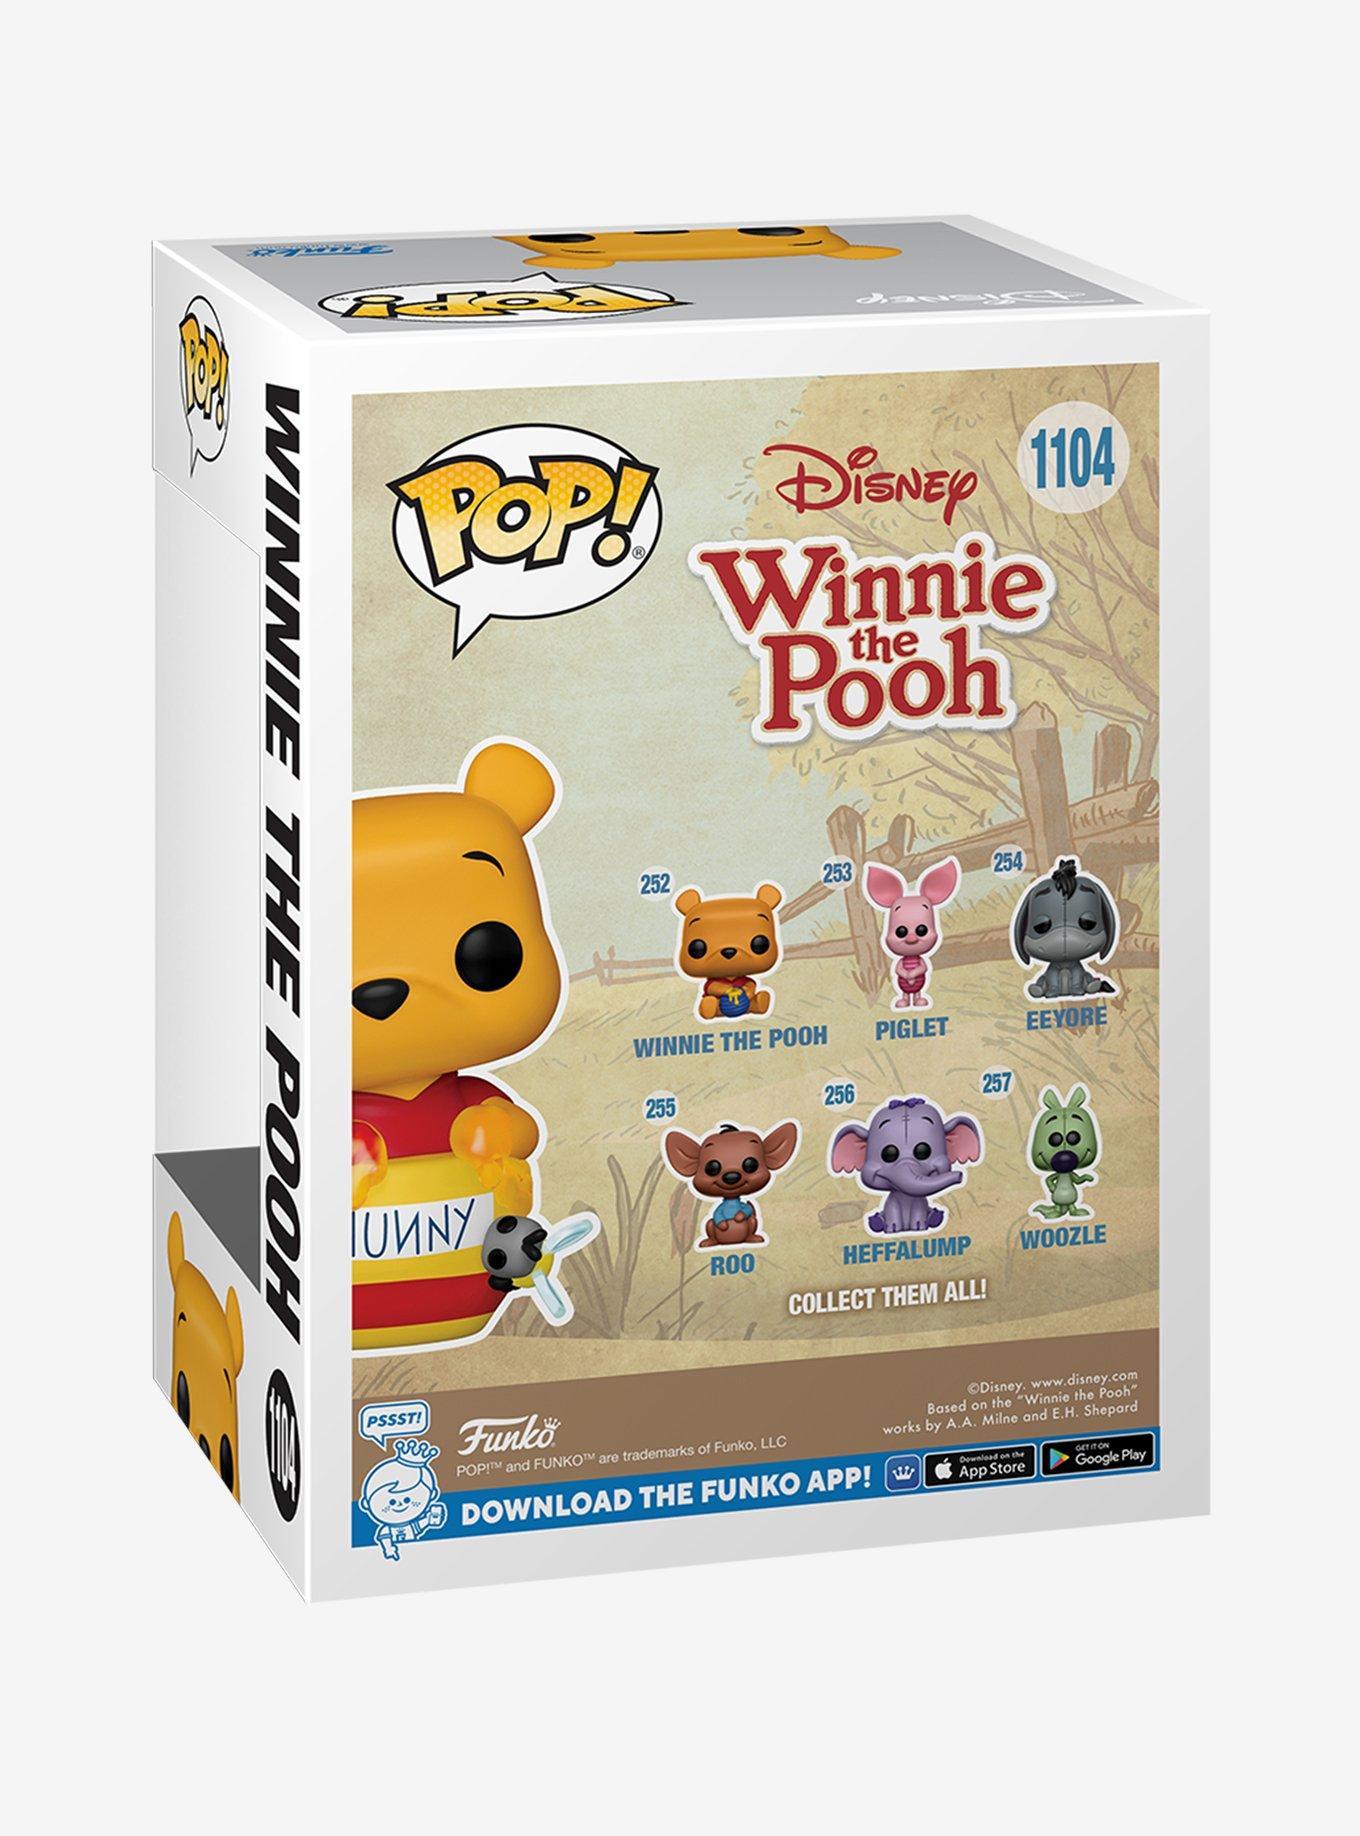 Hot Topic Funko Disney Diamond Collection Pop! Winnie The Pooh